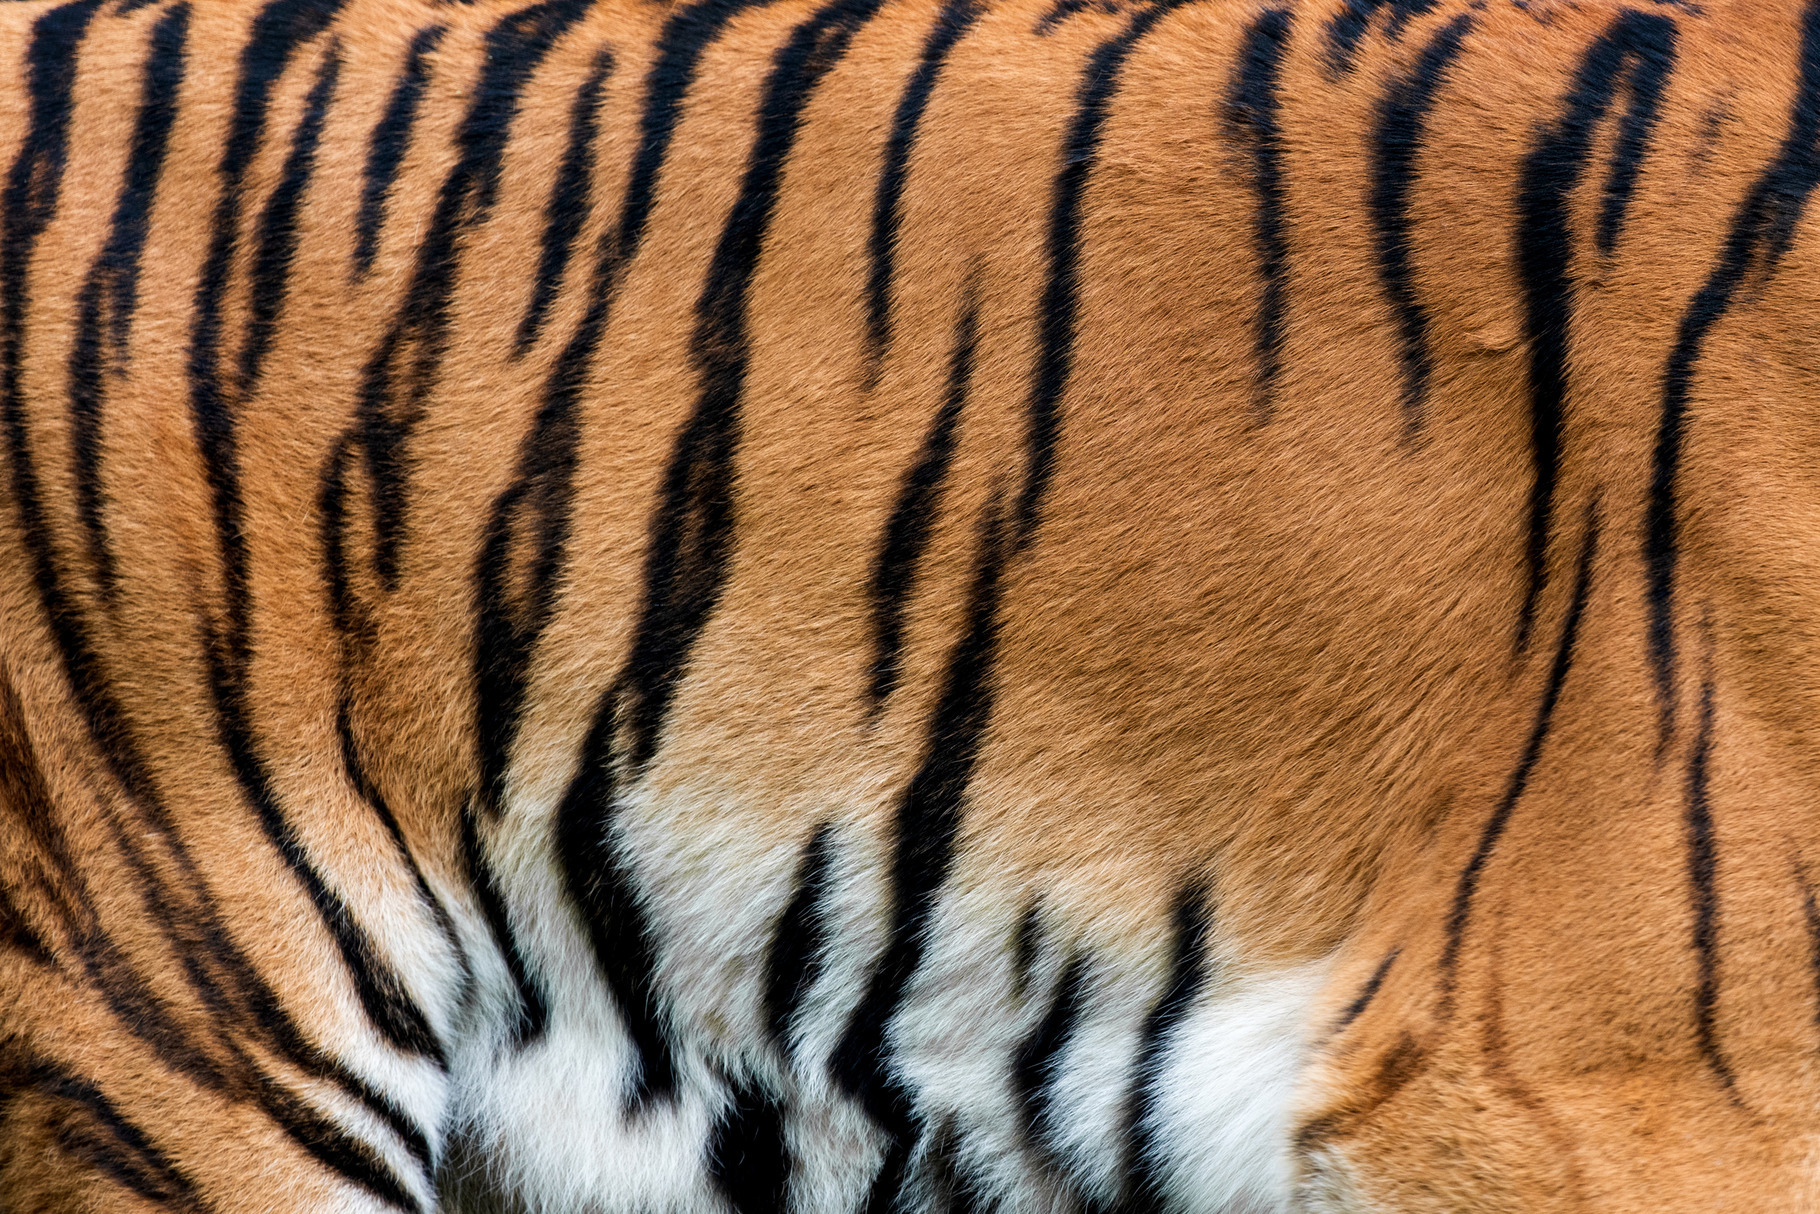 Tiger skin texture for background | Animal Stock Photos ~ Creative Market